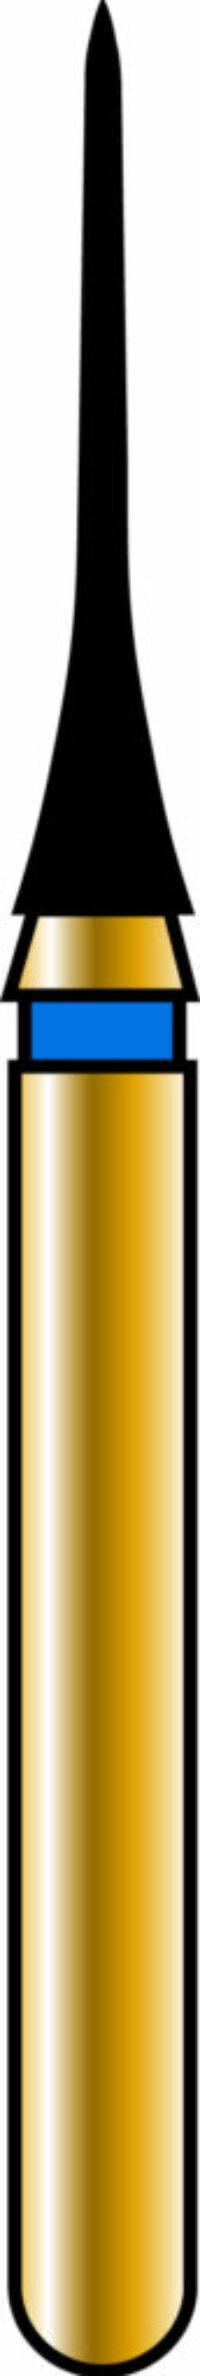 Interproximal 18-8mm Gold Diamond Bur